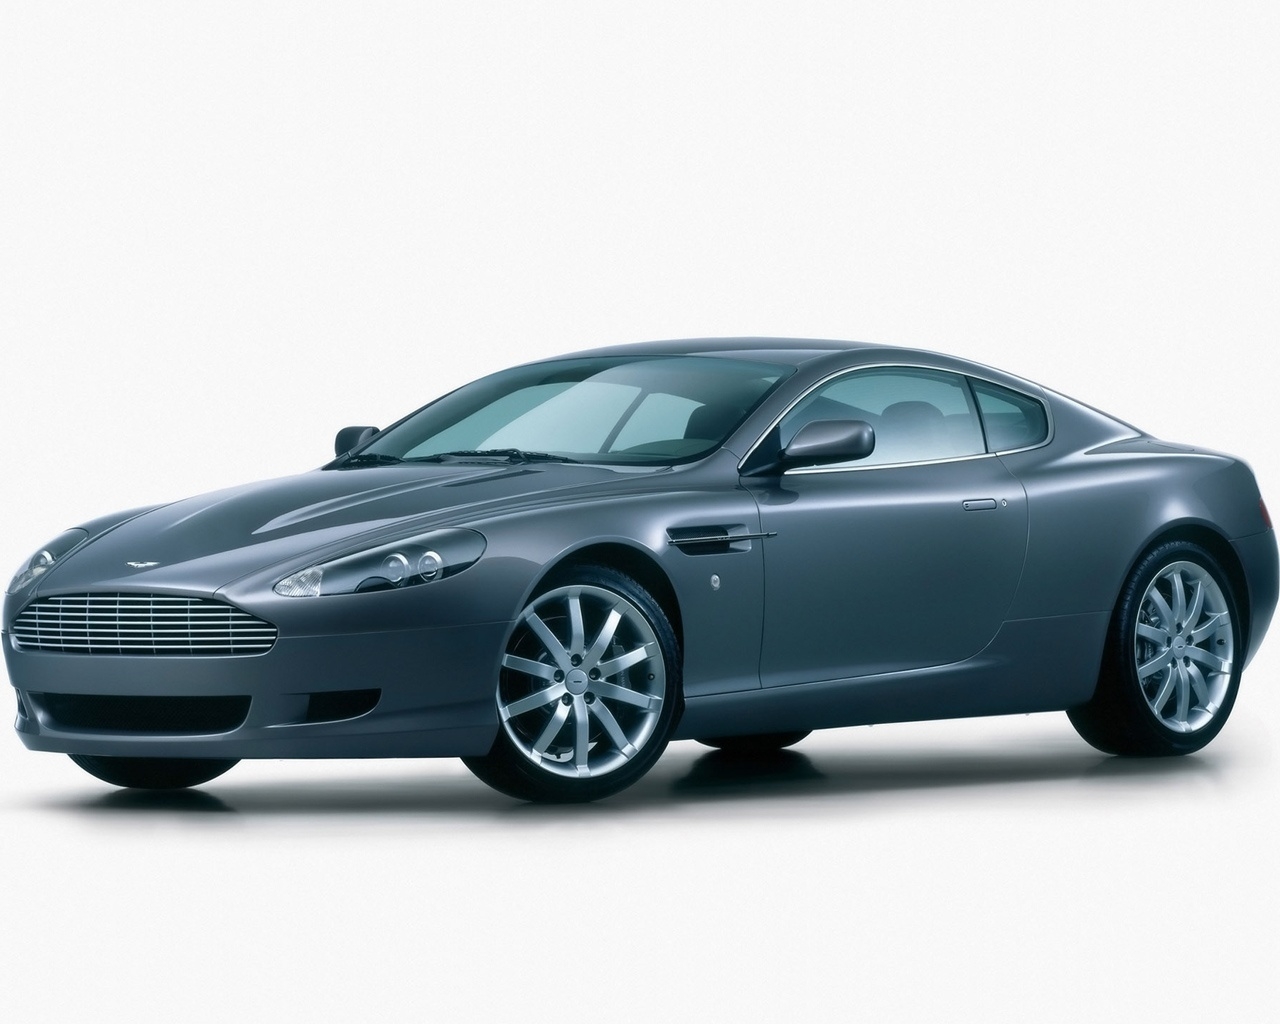 Aston Martin DB9 Studio for 1280 x 1024 resolution